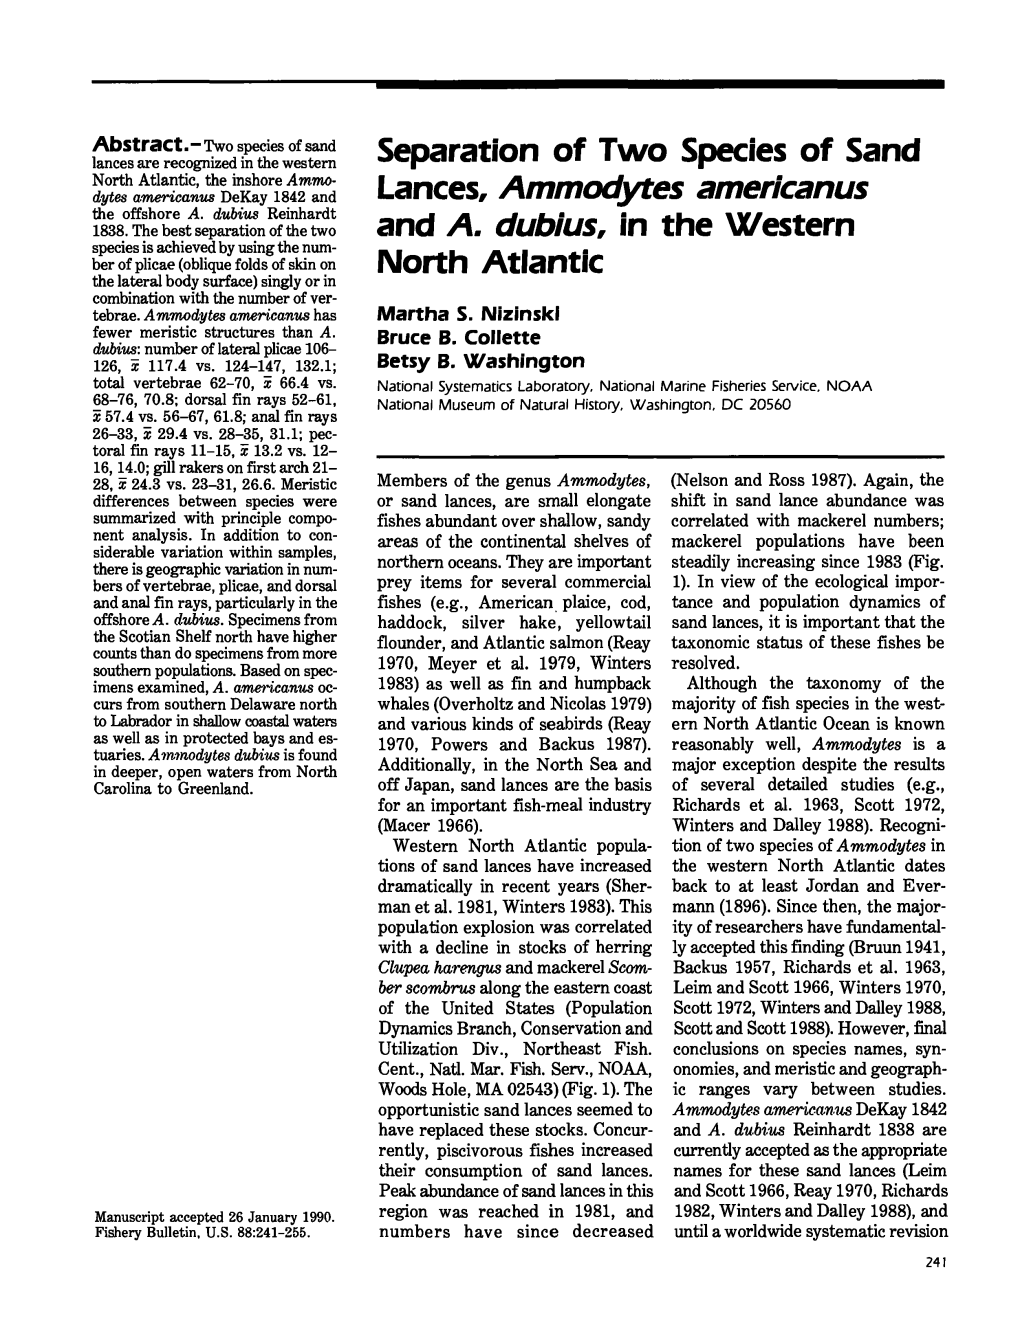 Separation of Two Species of Sand Lances, Ammodytes Americanus